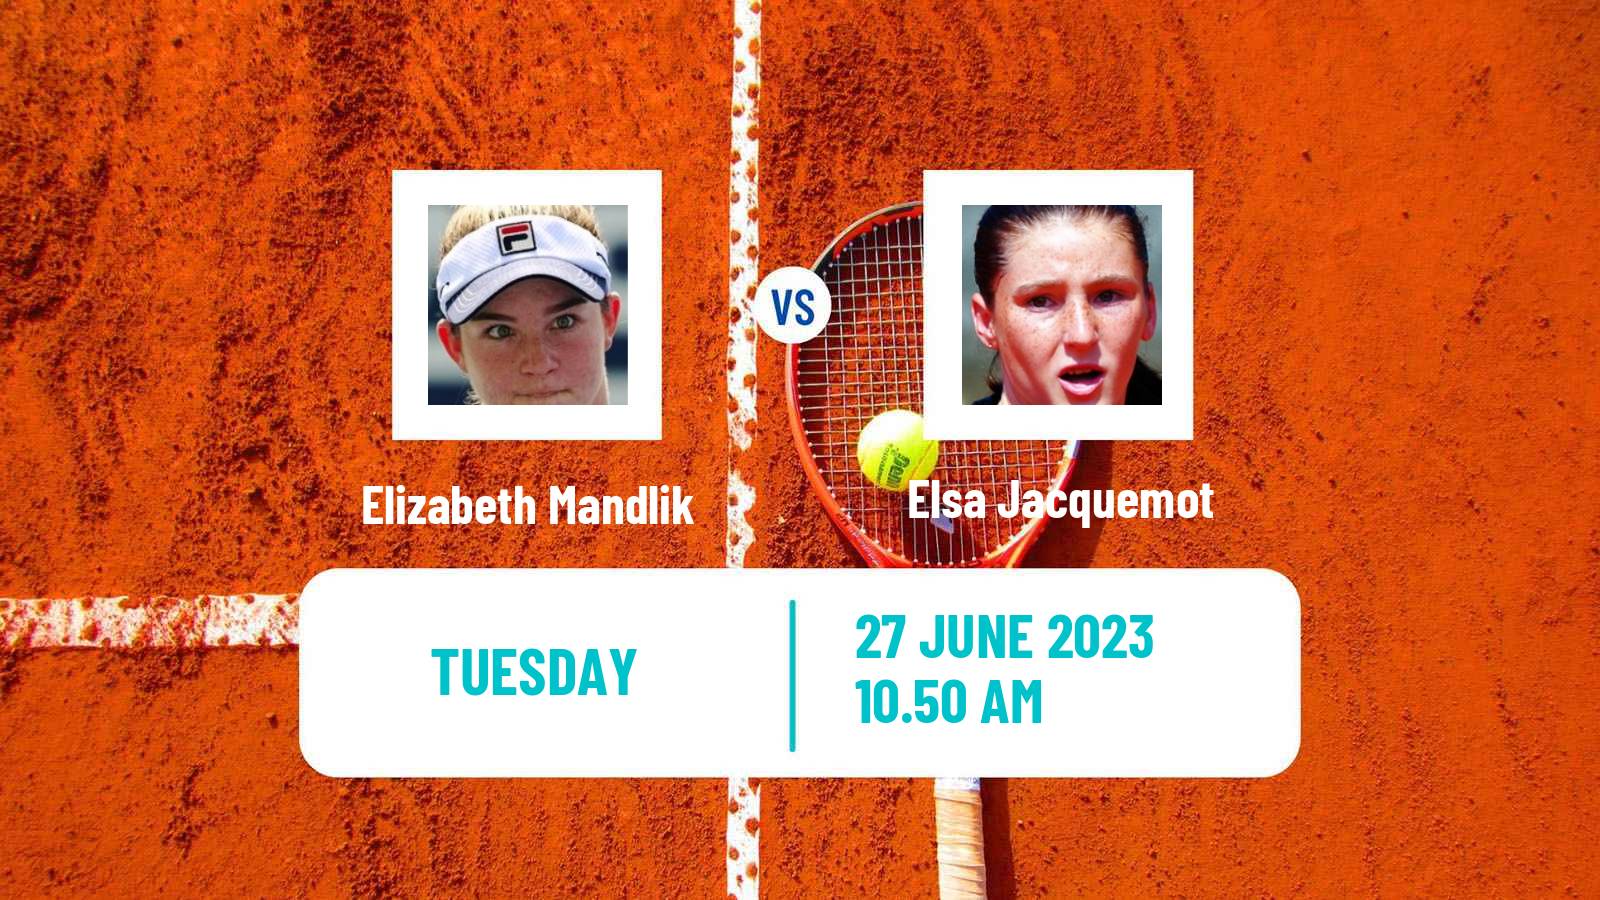 Tennis WTA Wimbledon Elizabeth Mandlik - Elsa Jacquemot